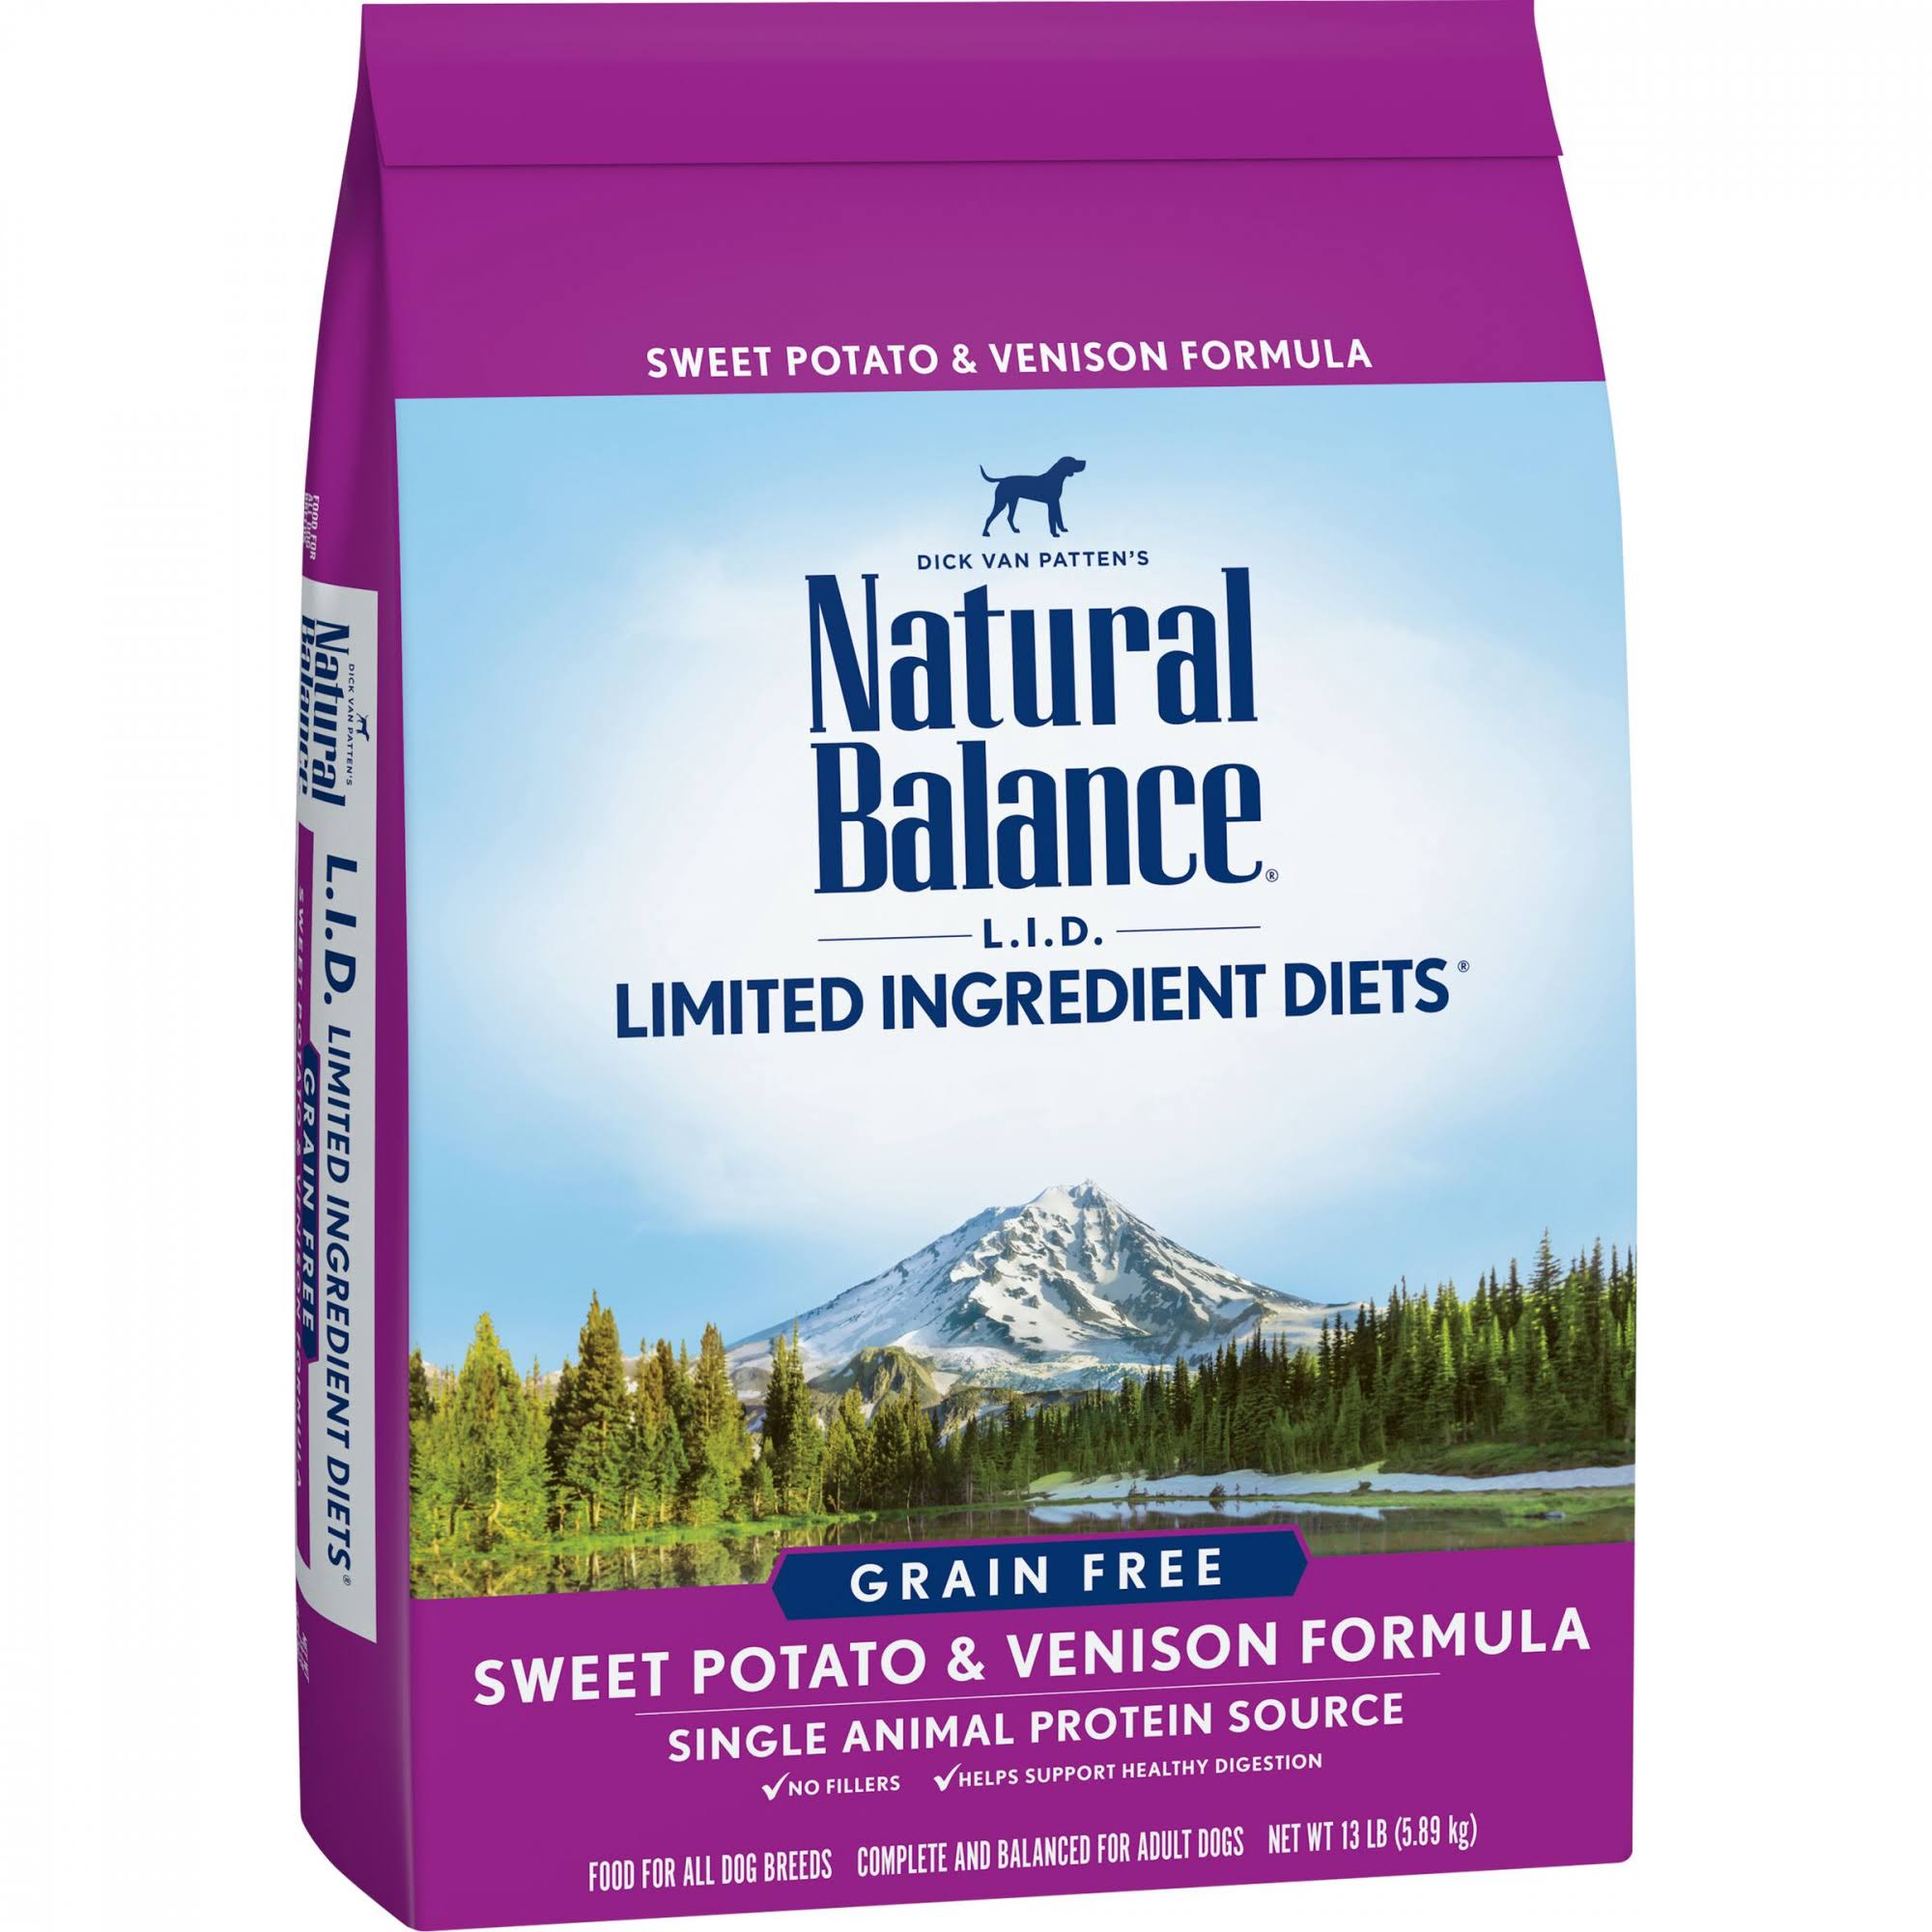 Natural Balance Limited Ingredient Diets Dog Food - Sweet Potato and Venison Formula